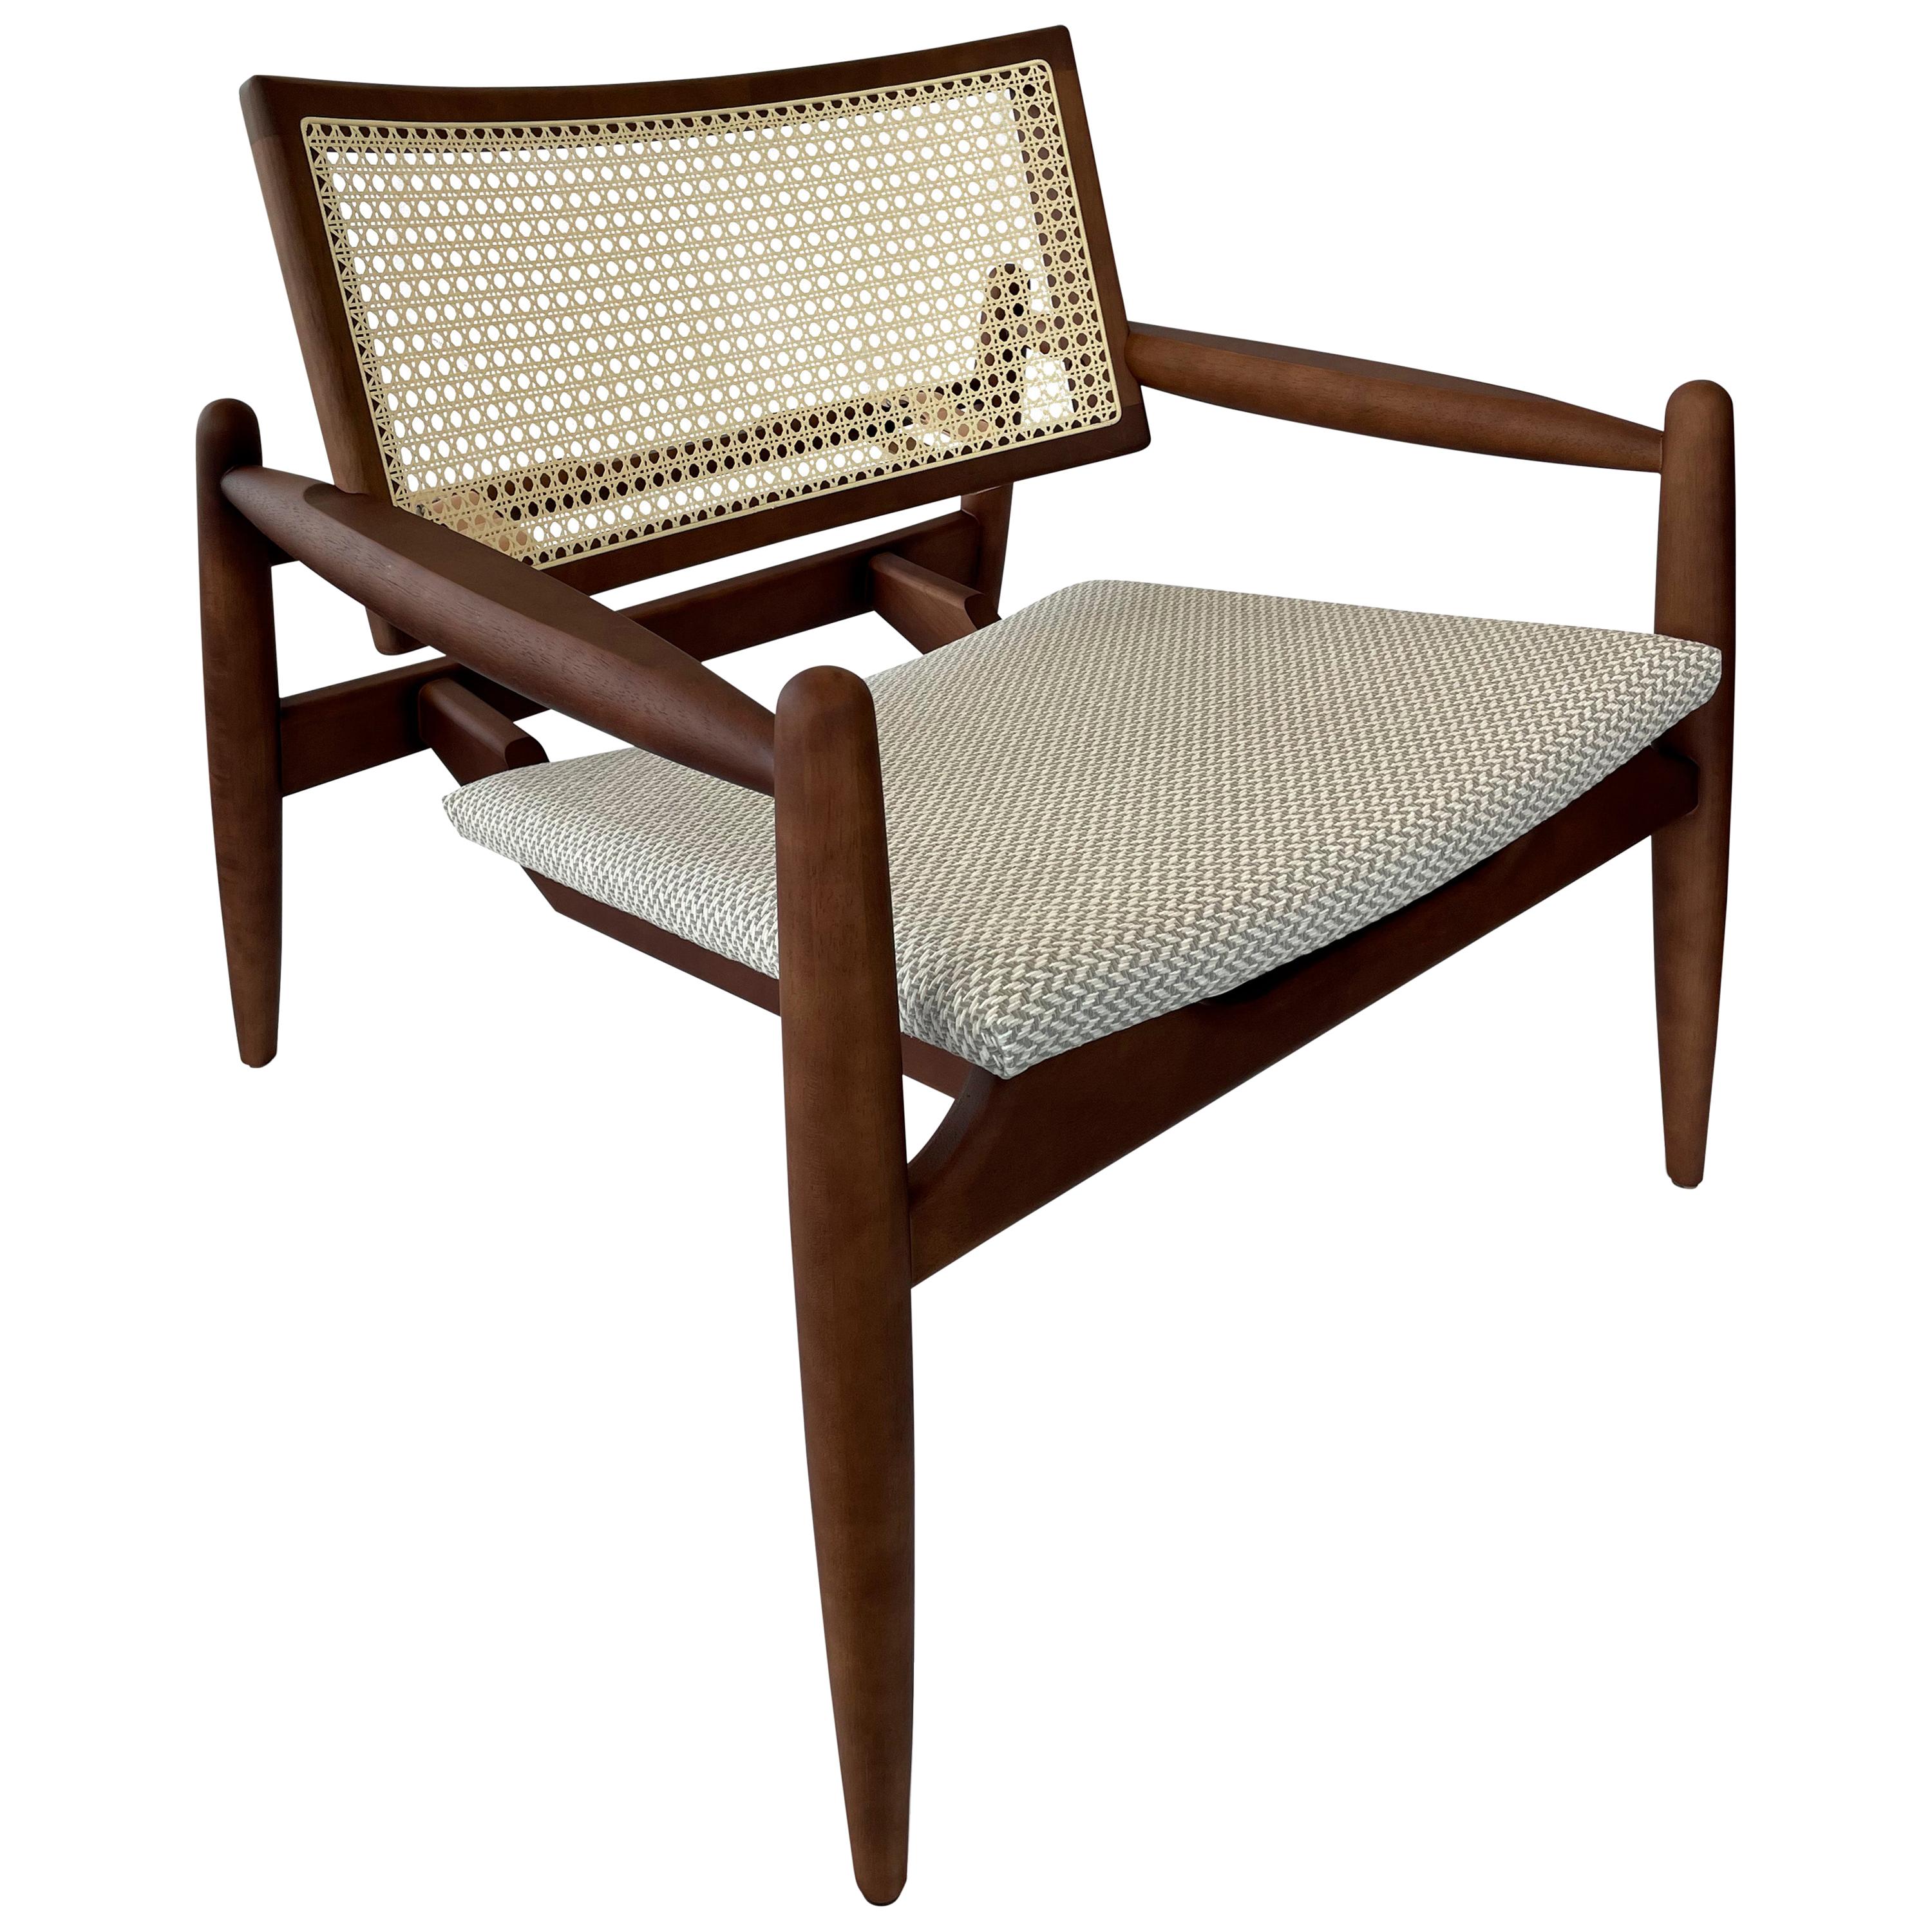 Soho Curved Cane-Back Chair in Walnut Wood with Herringbone Fabric Chair Seat